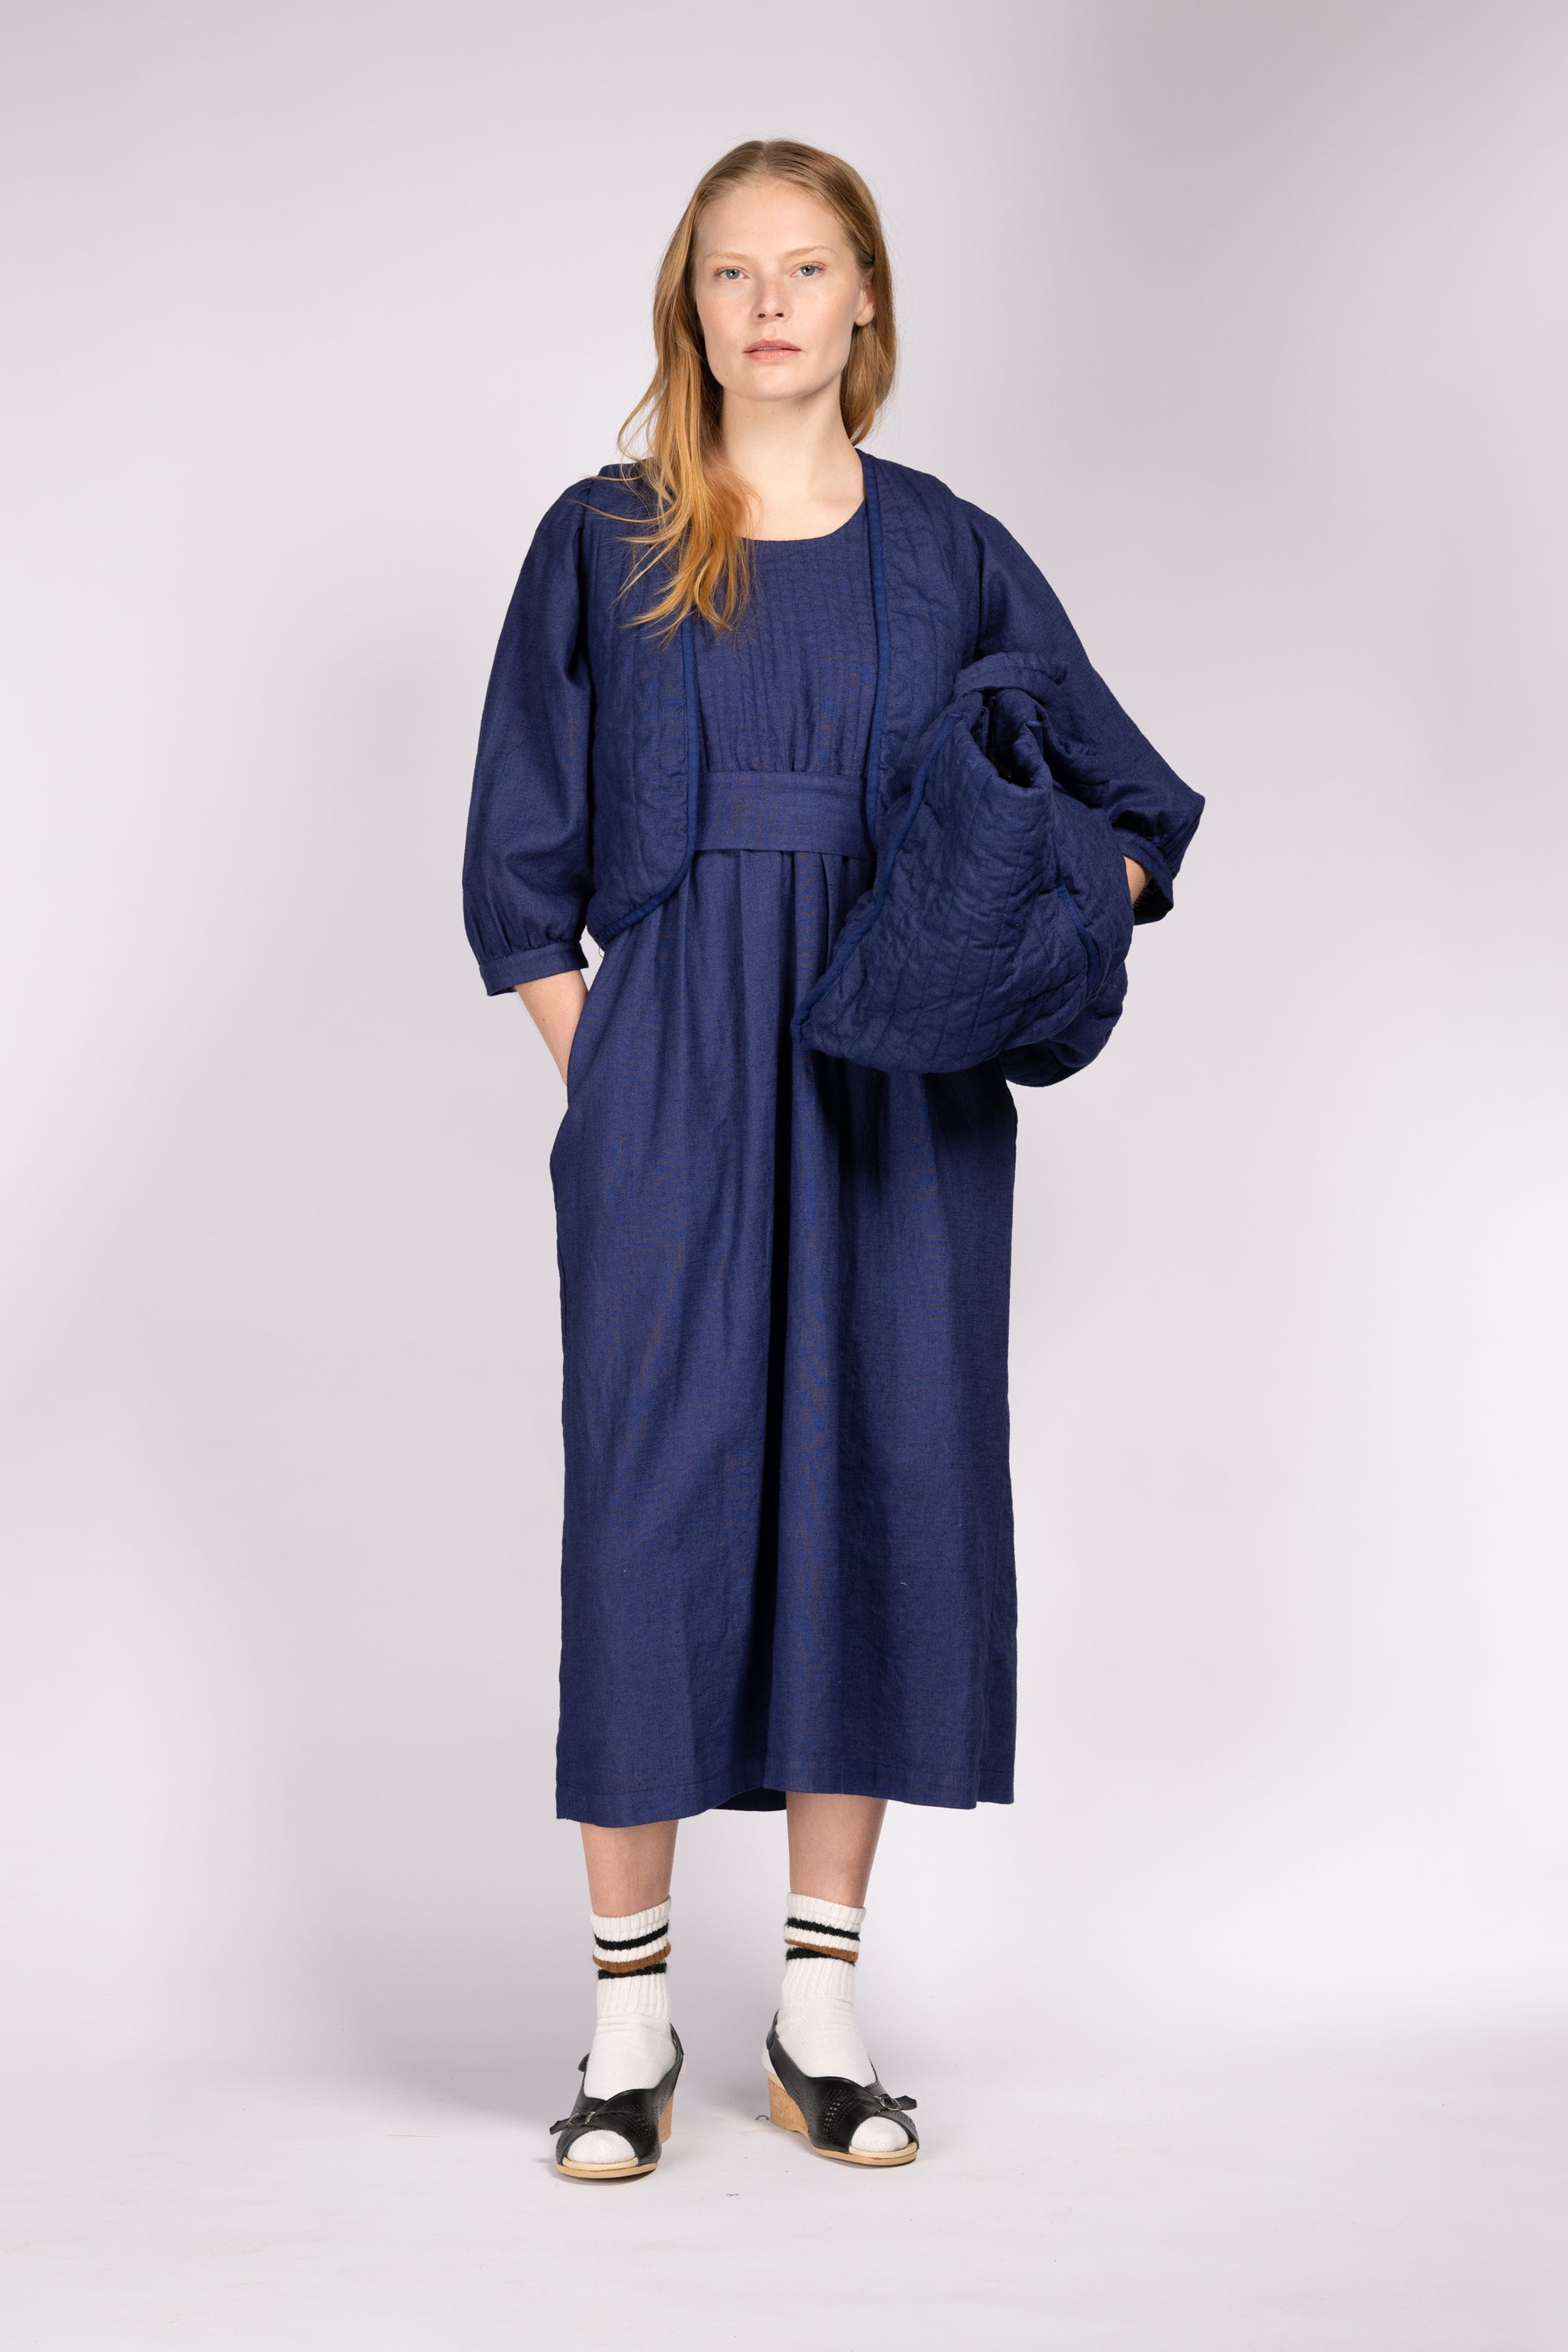 'Woodstock' Quilt Waistcoat - French Blue Linen